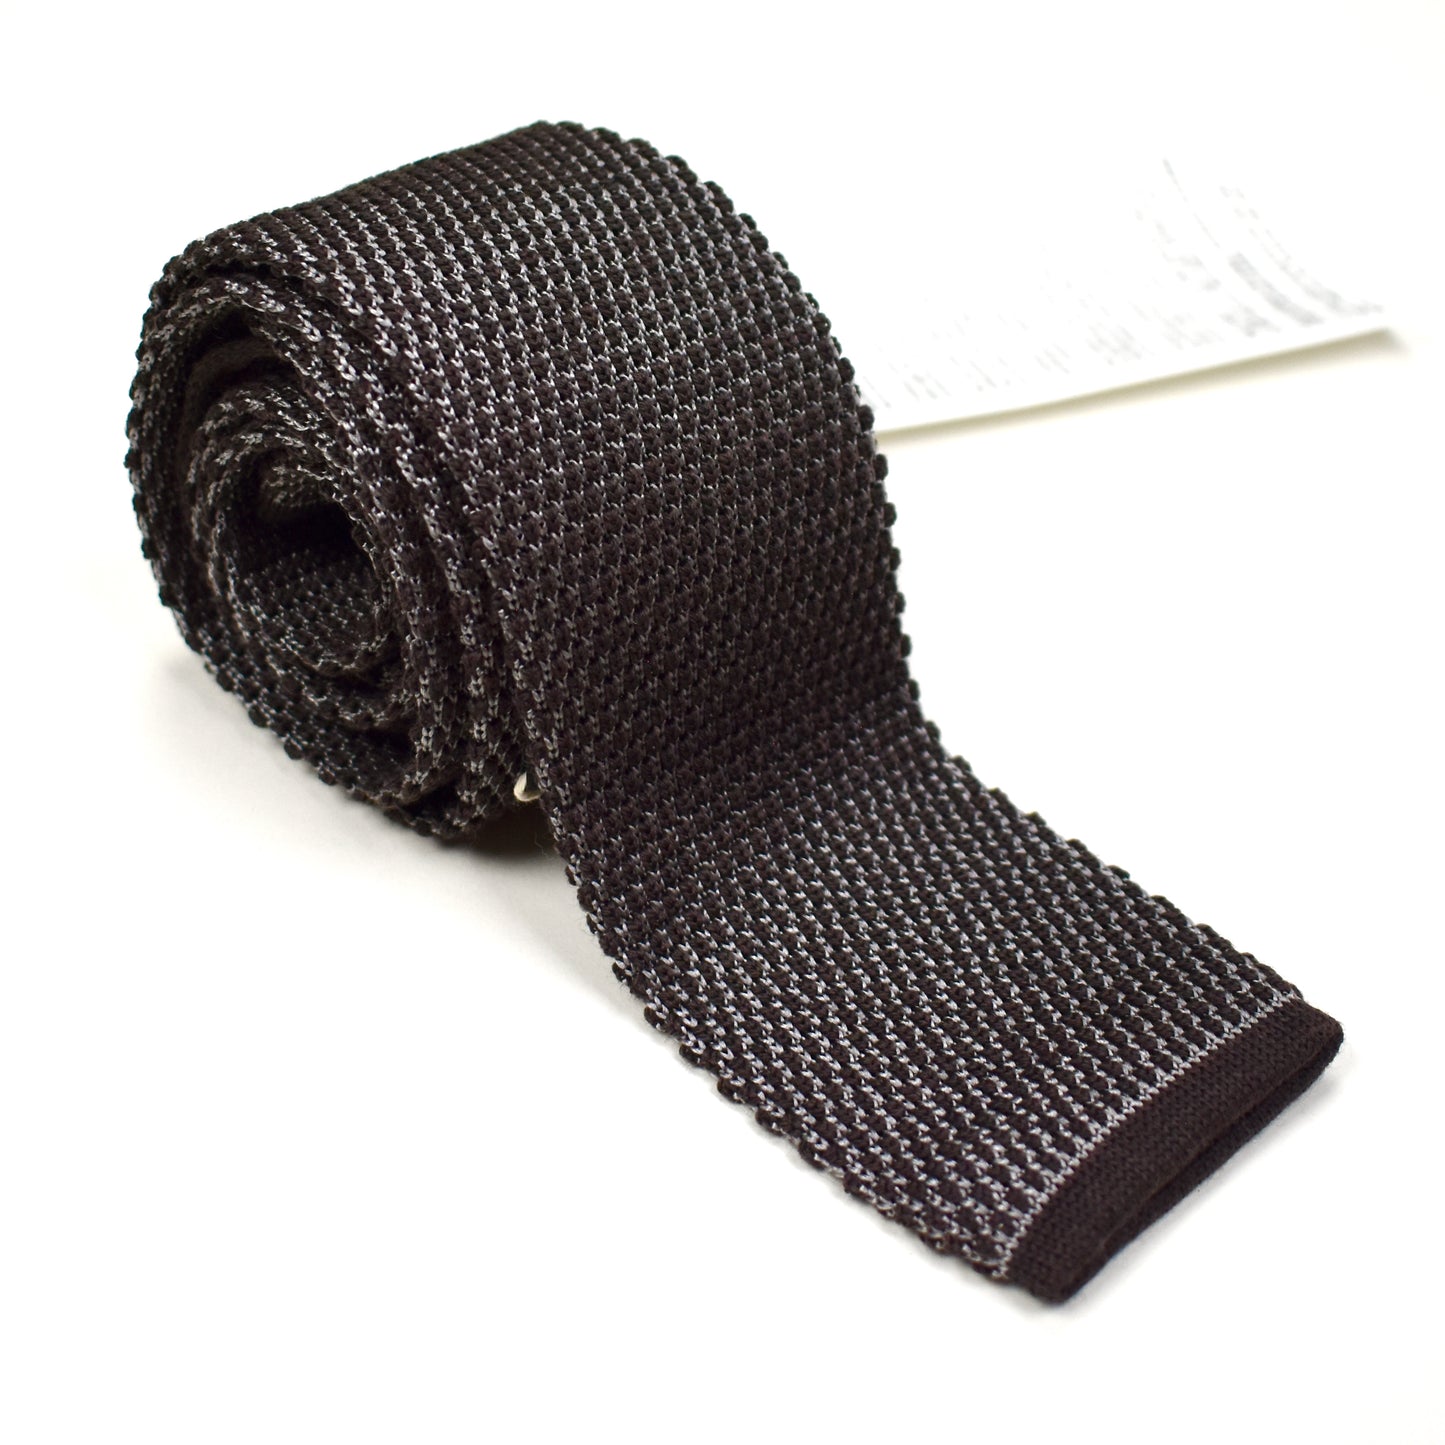 Brioni - Gray & Brown Wool/Silk Knit Tie